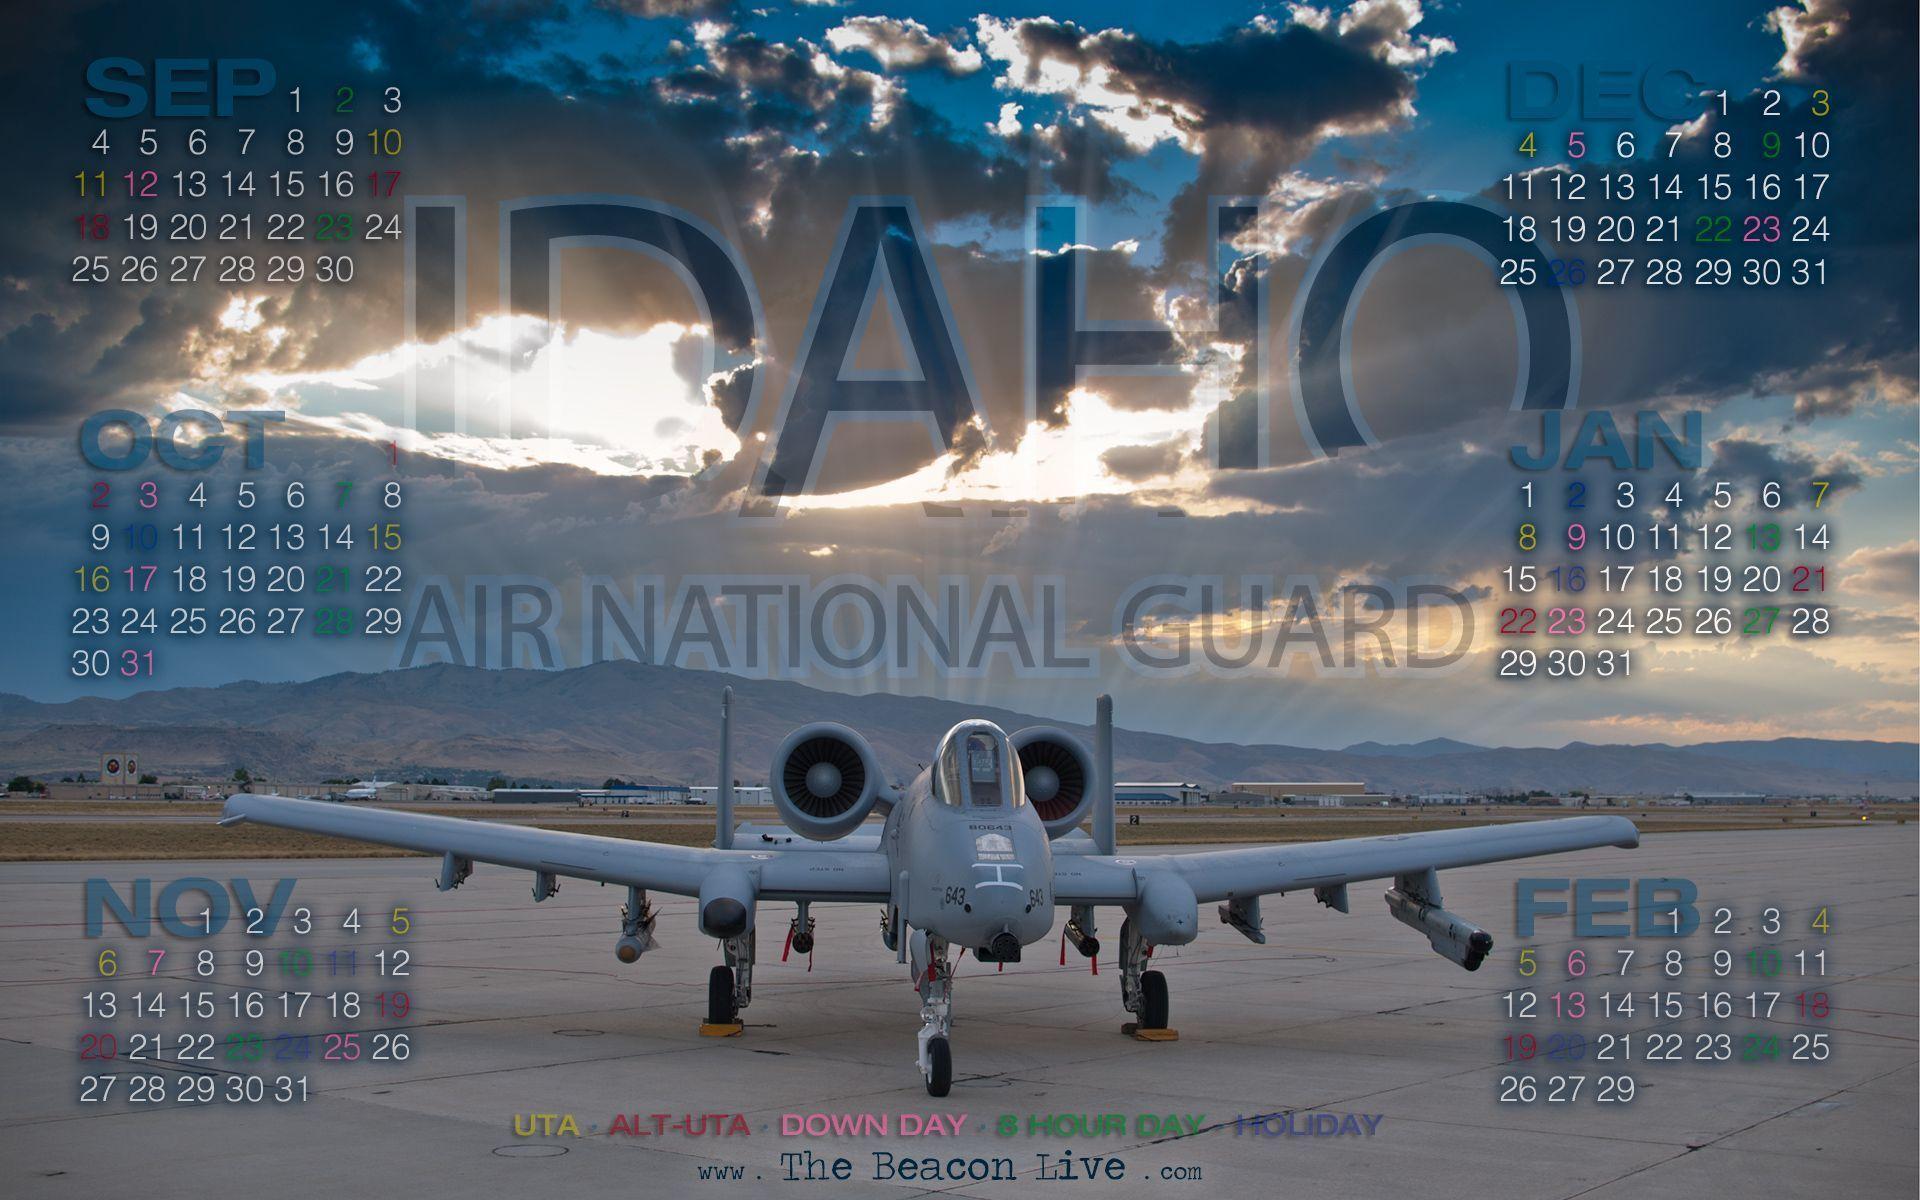 Idaho Air National Guard Wallpaper Calendar Warthog News